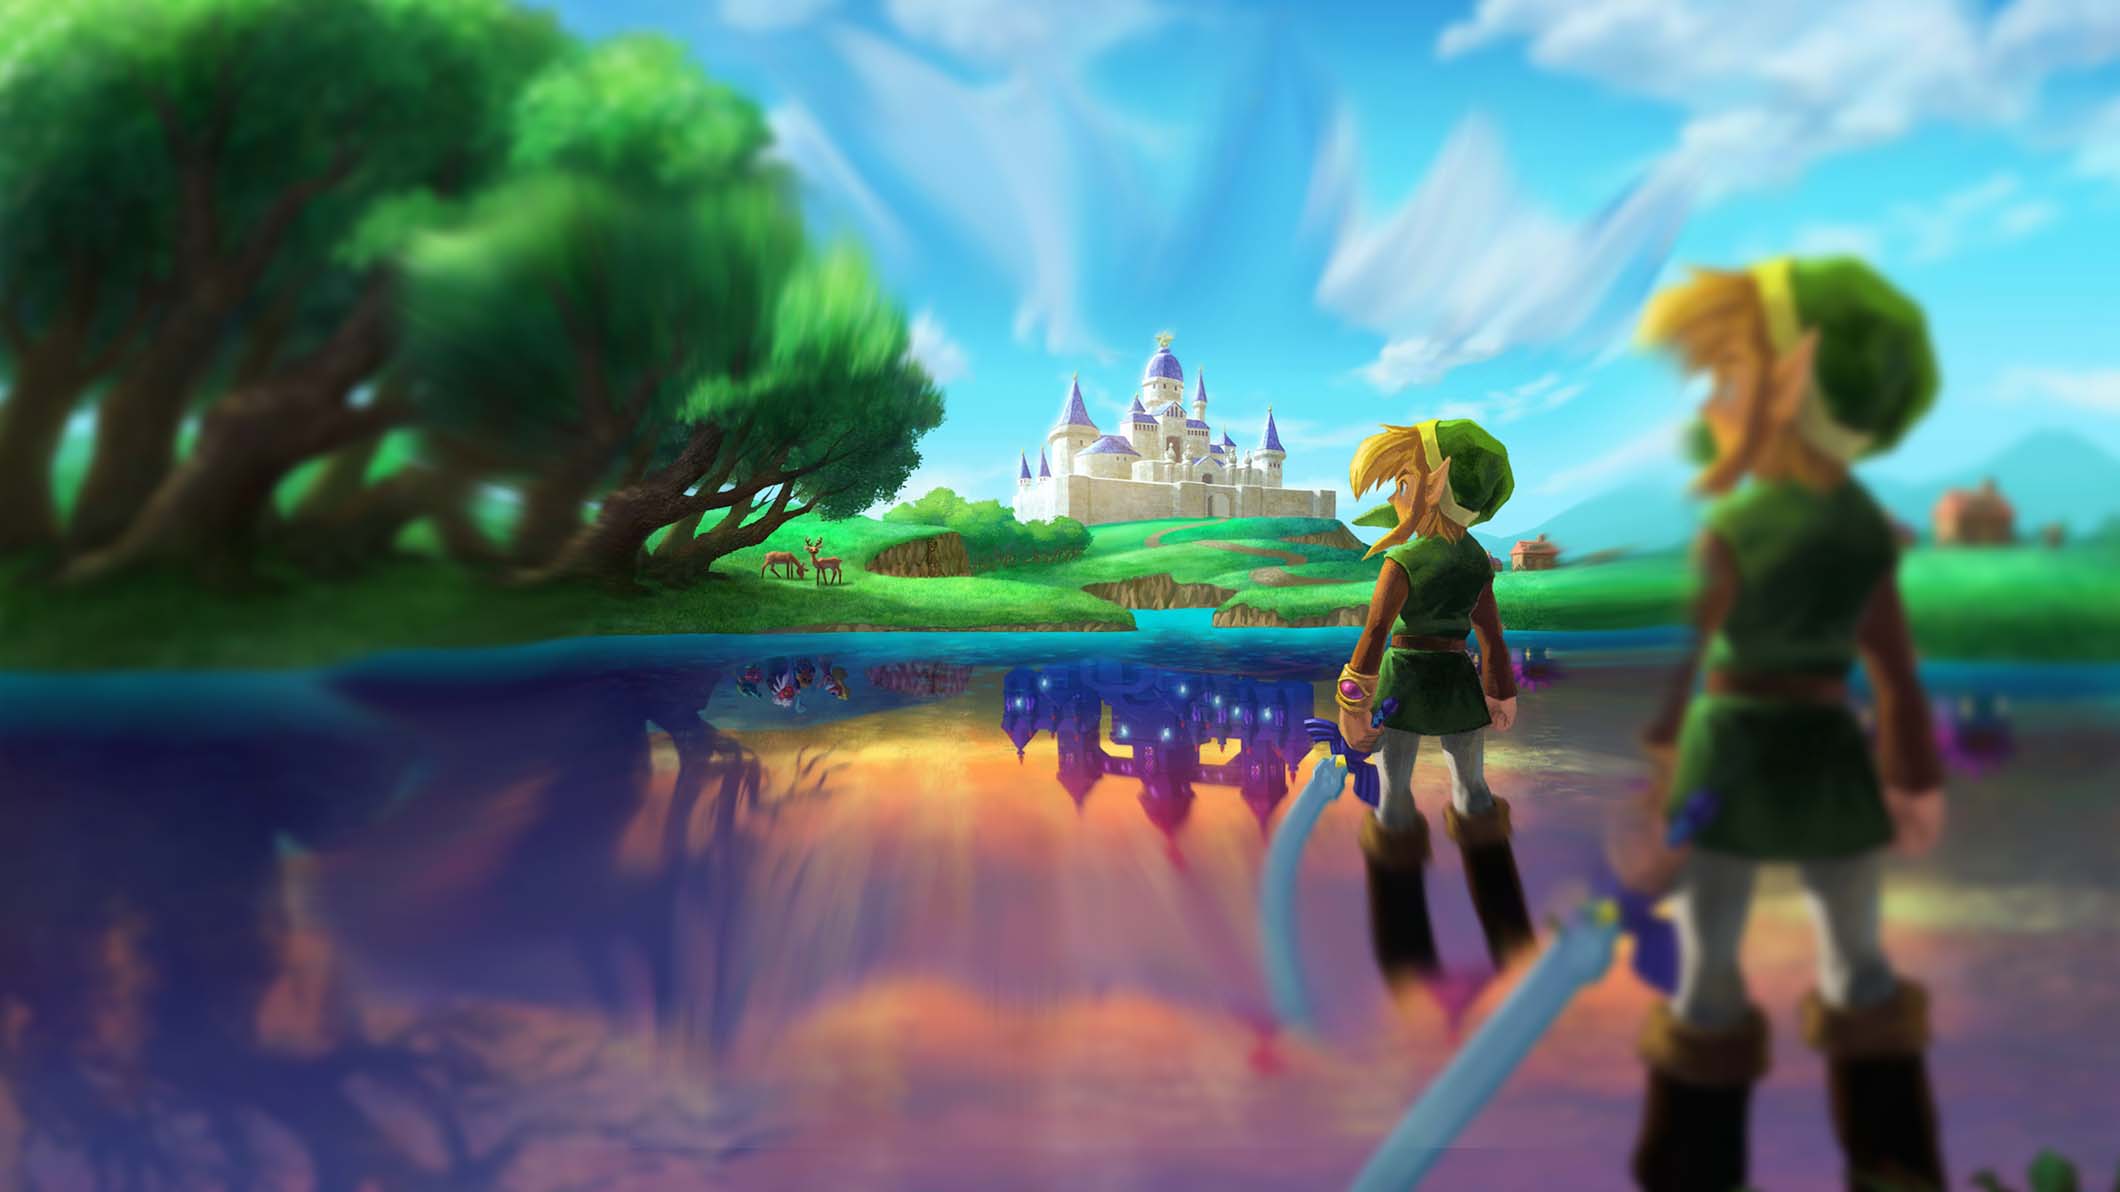 Video Game The Legend Of Zelda: A Link Between Worlds HD Wallpaper | Background Image